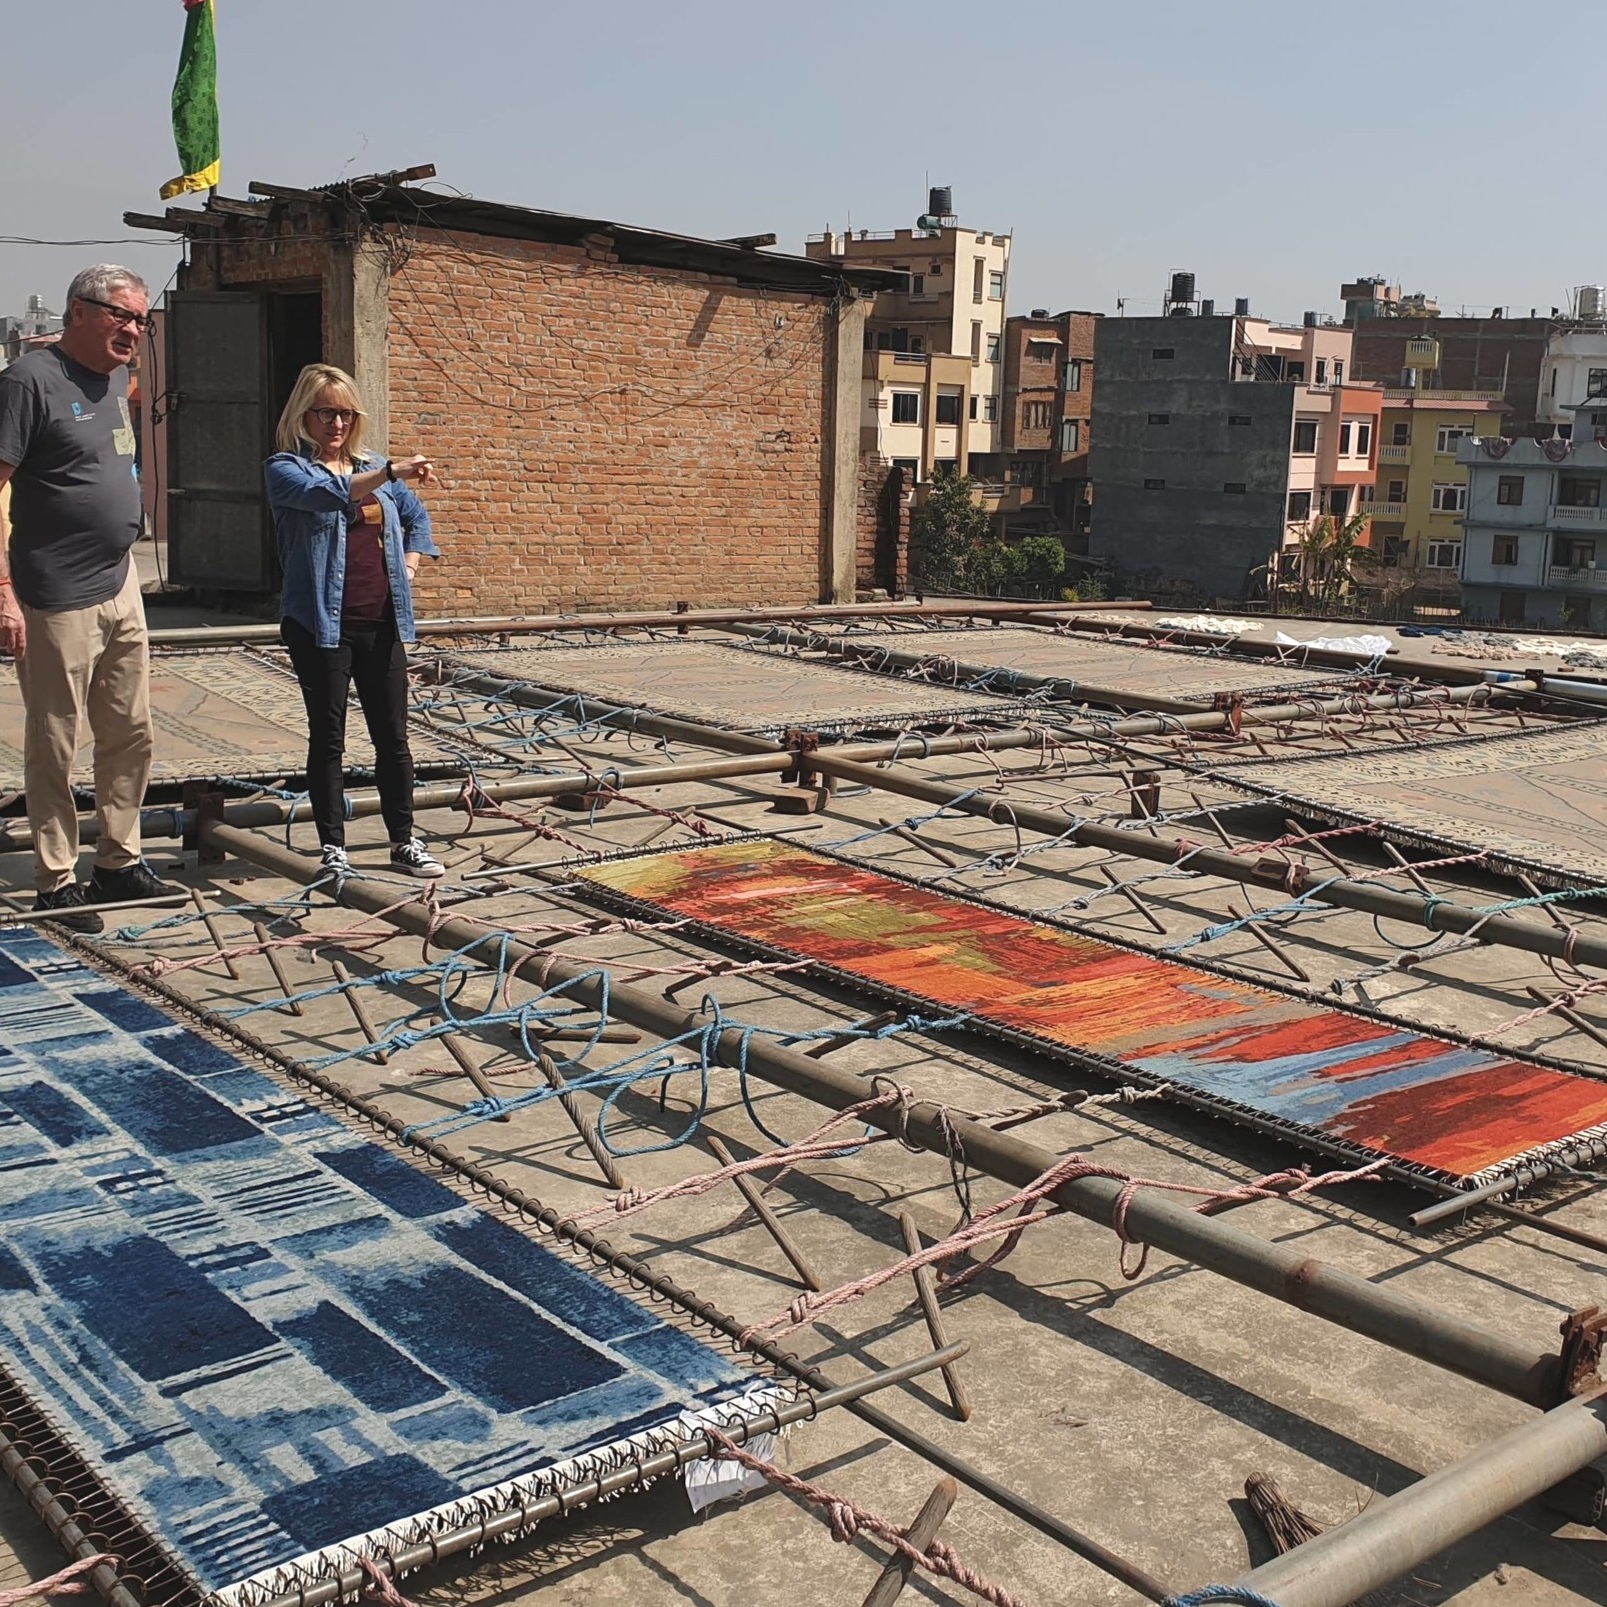   Heather and Jim inspecting carpets in Kathmandu  